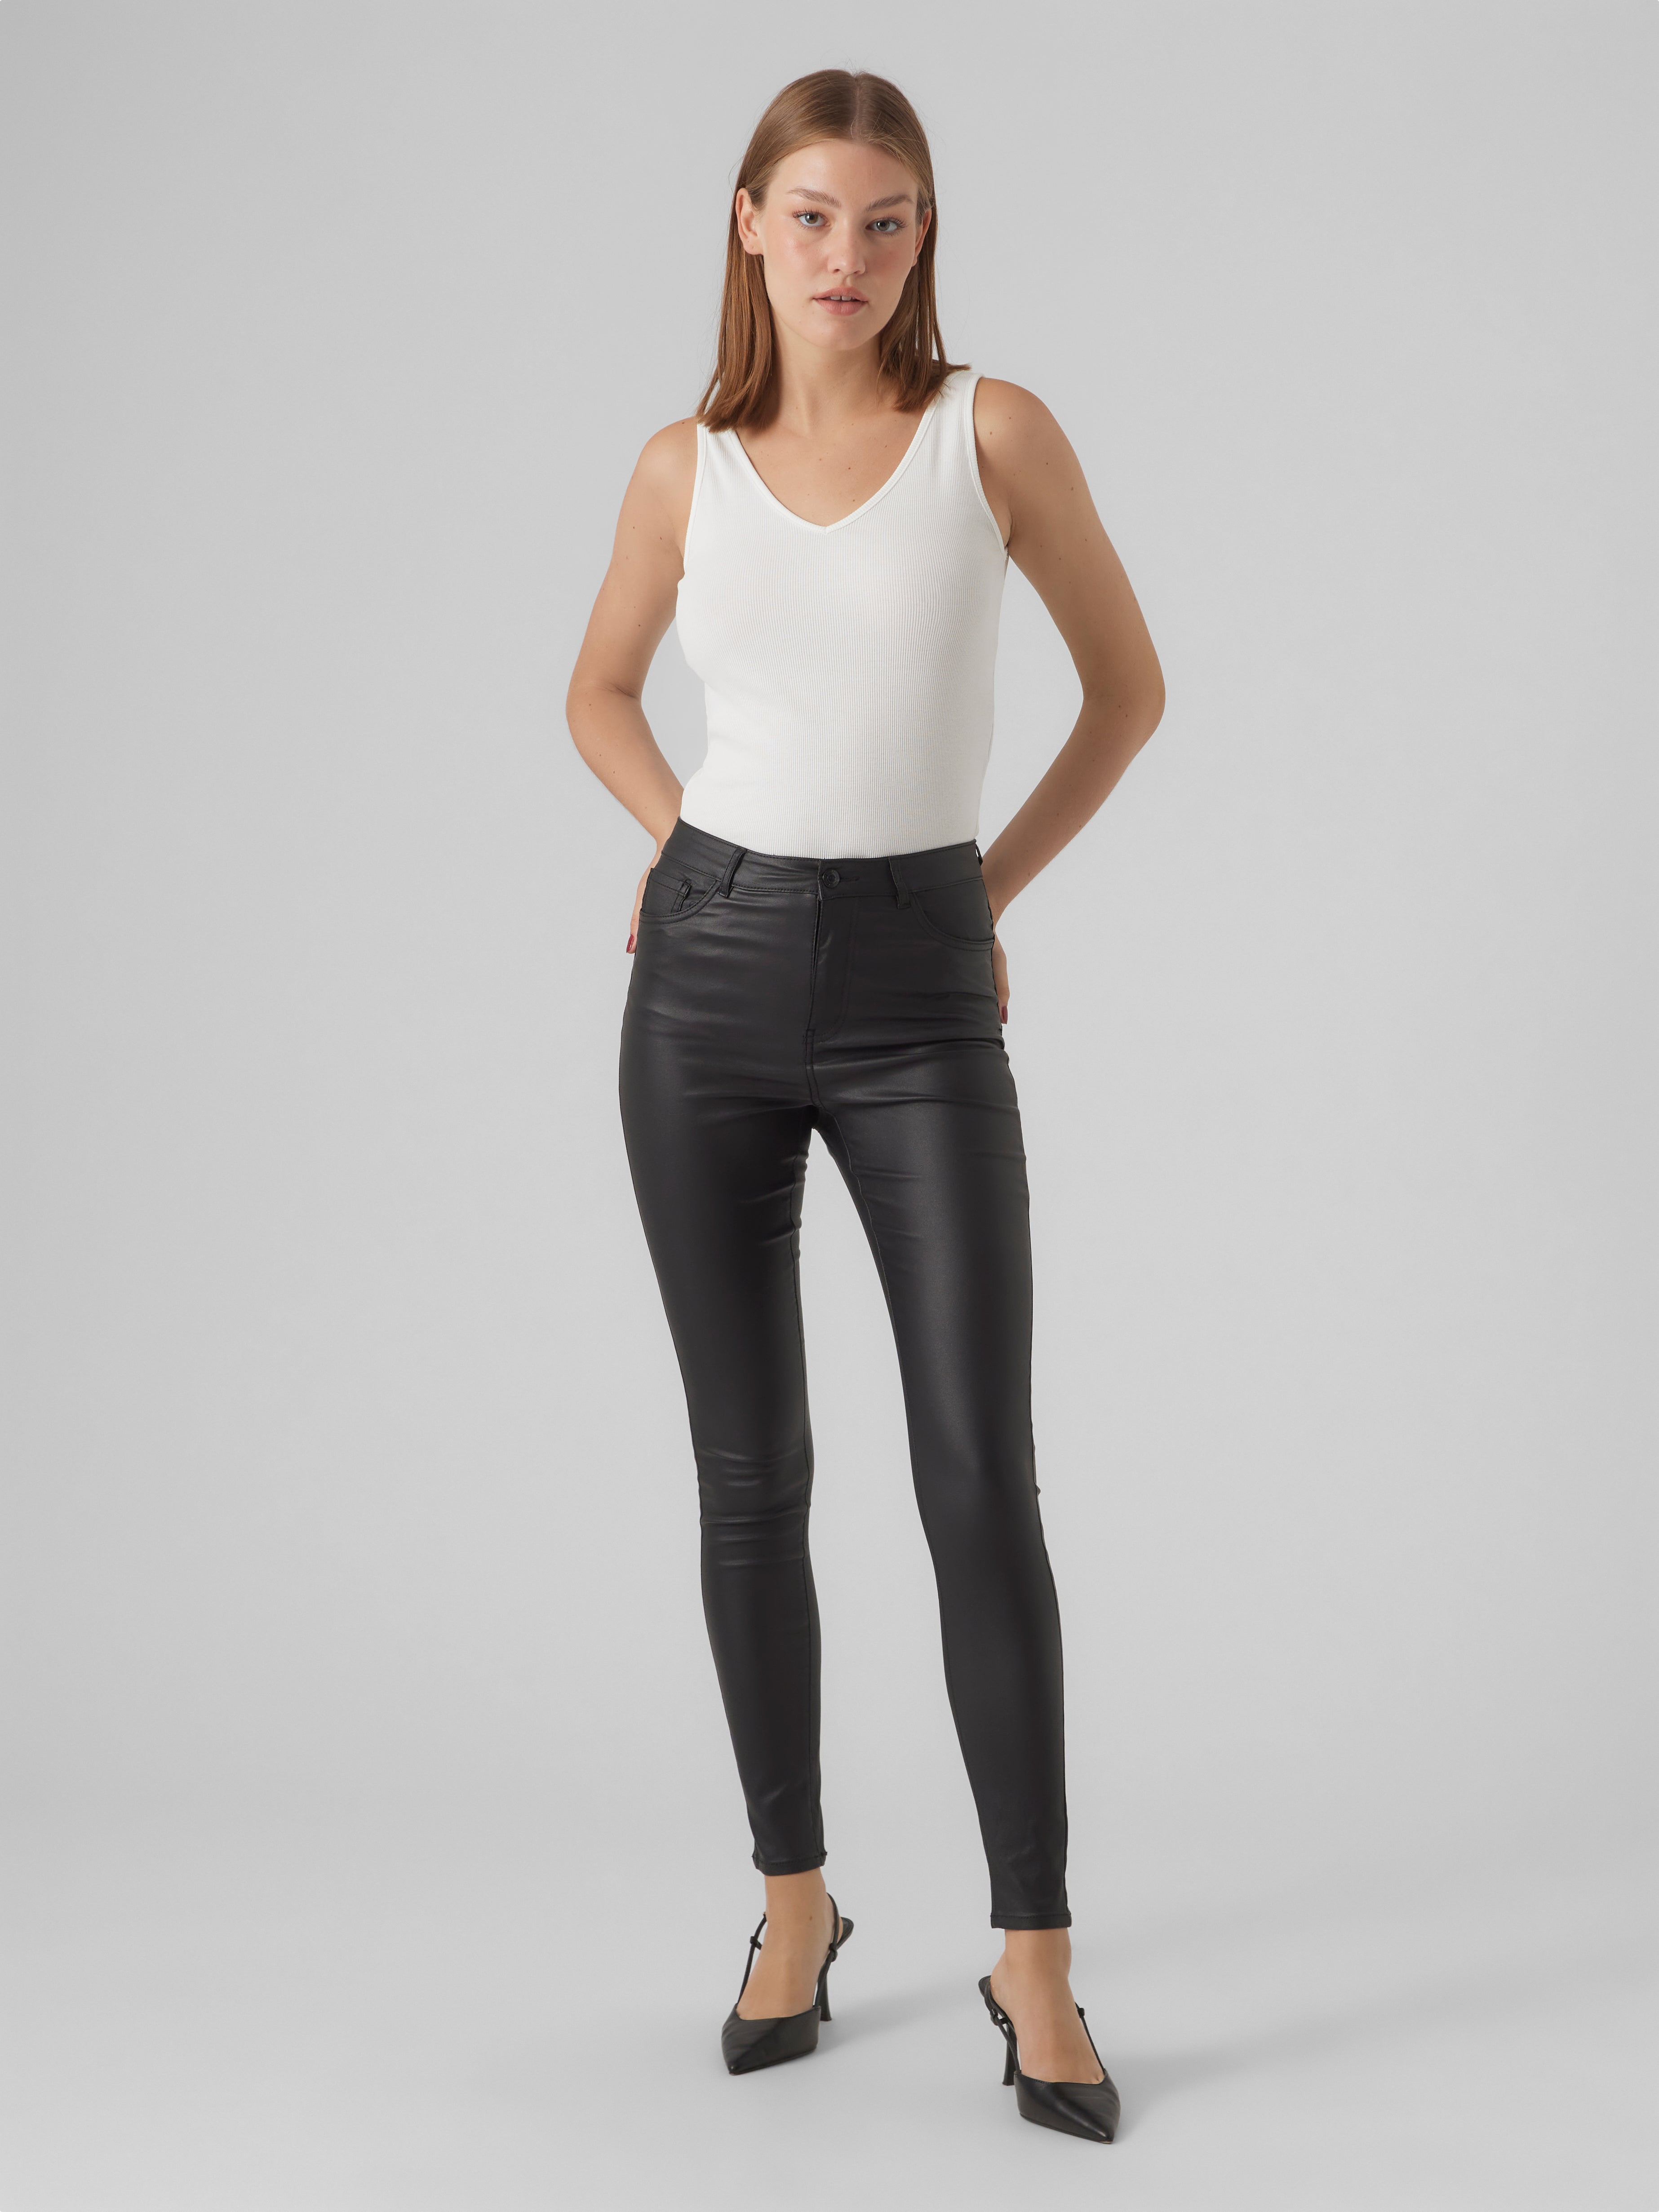 Robell Marie Petite Shorter Length Trousers | So Simply